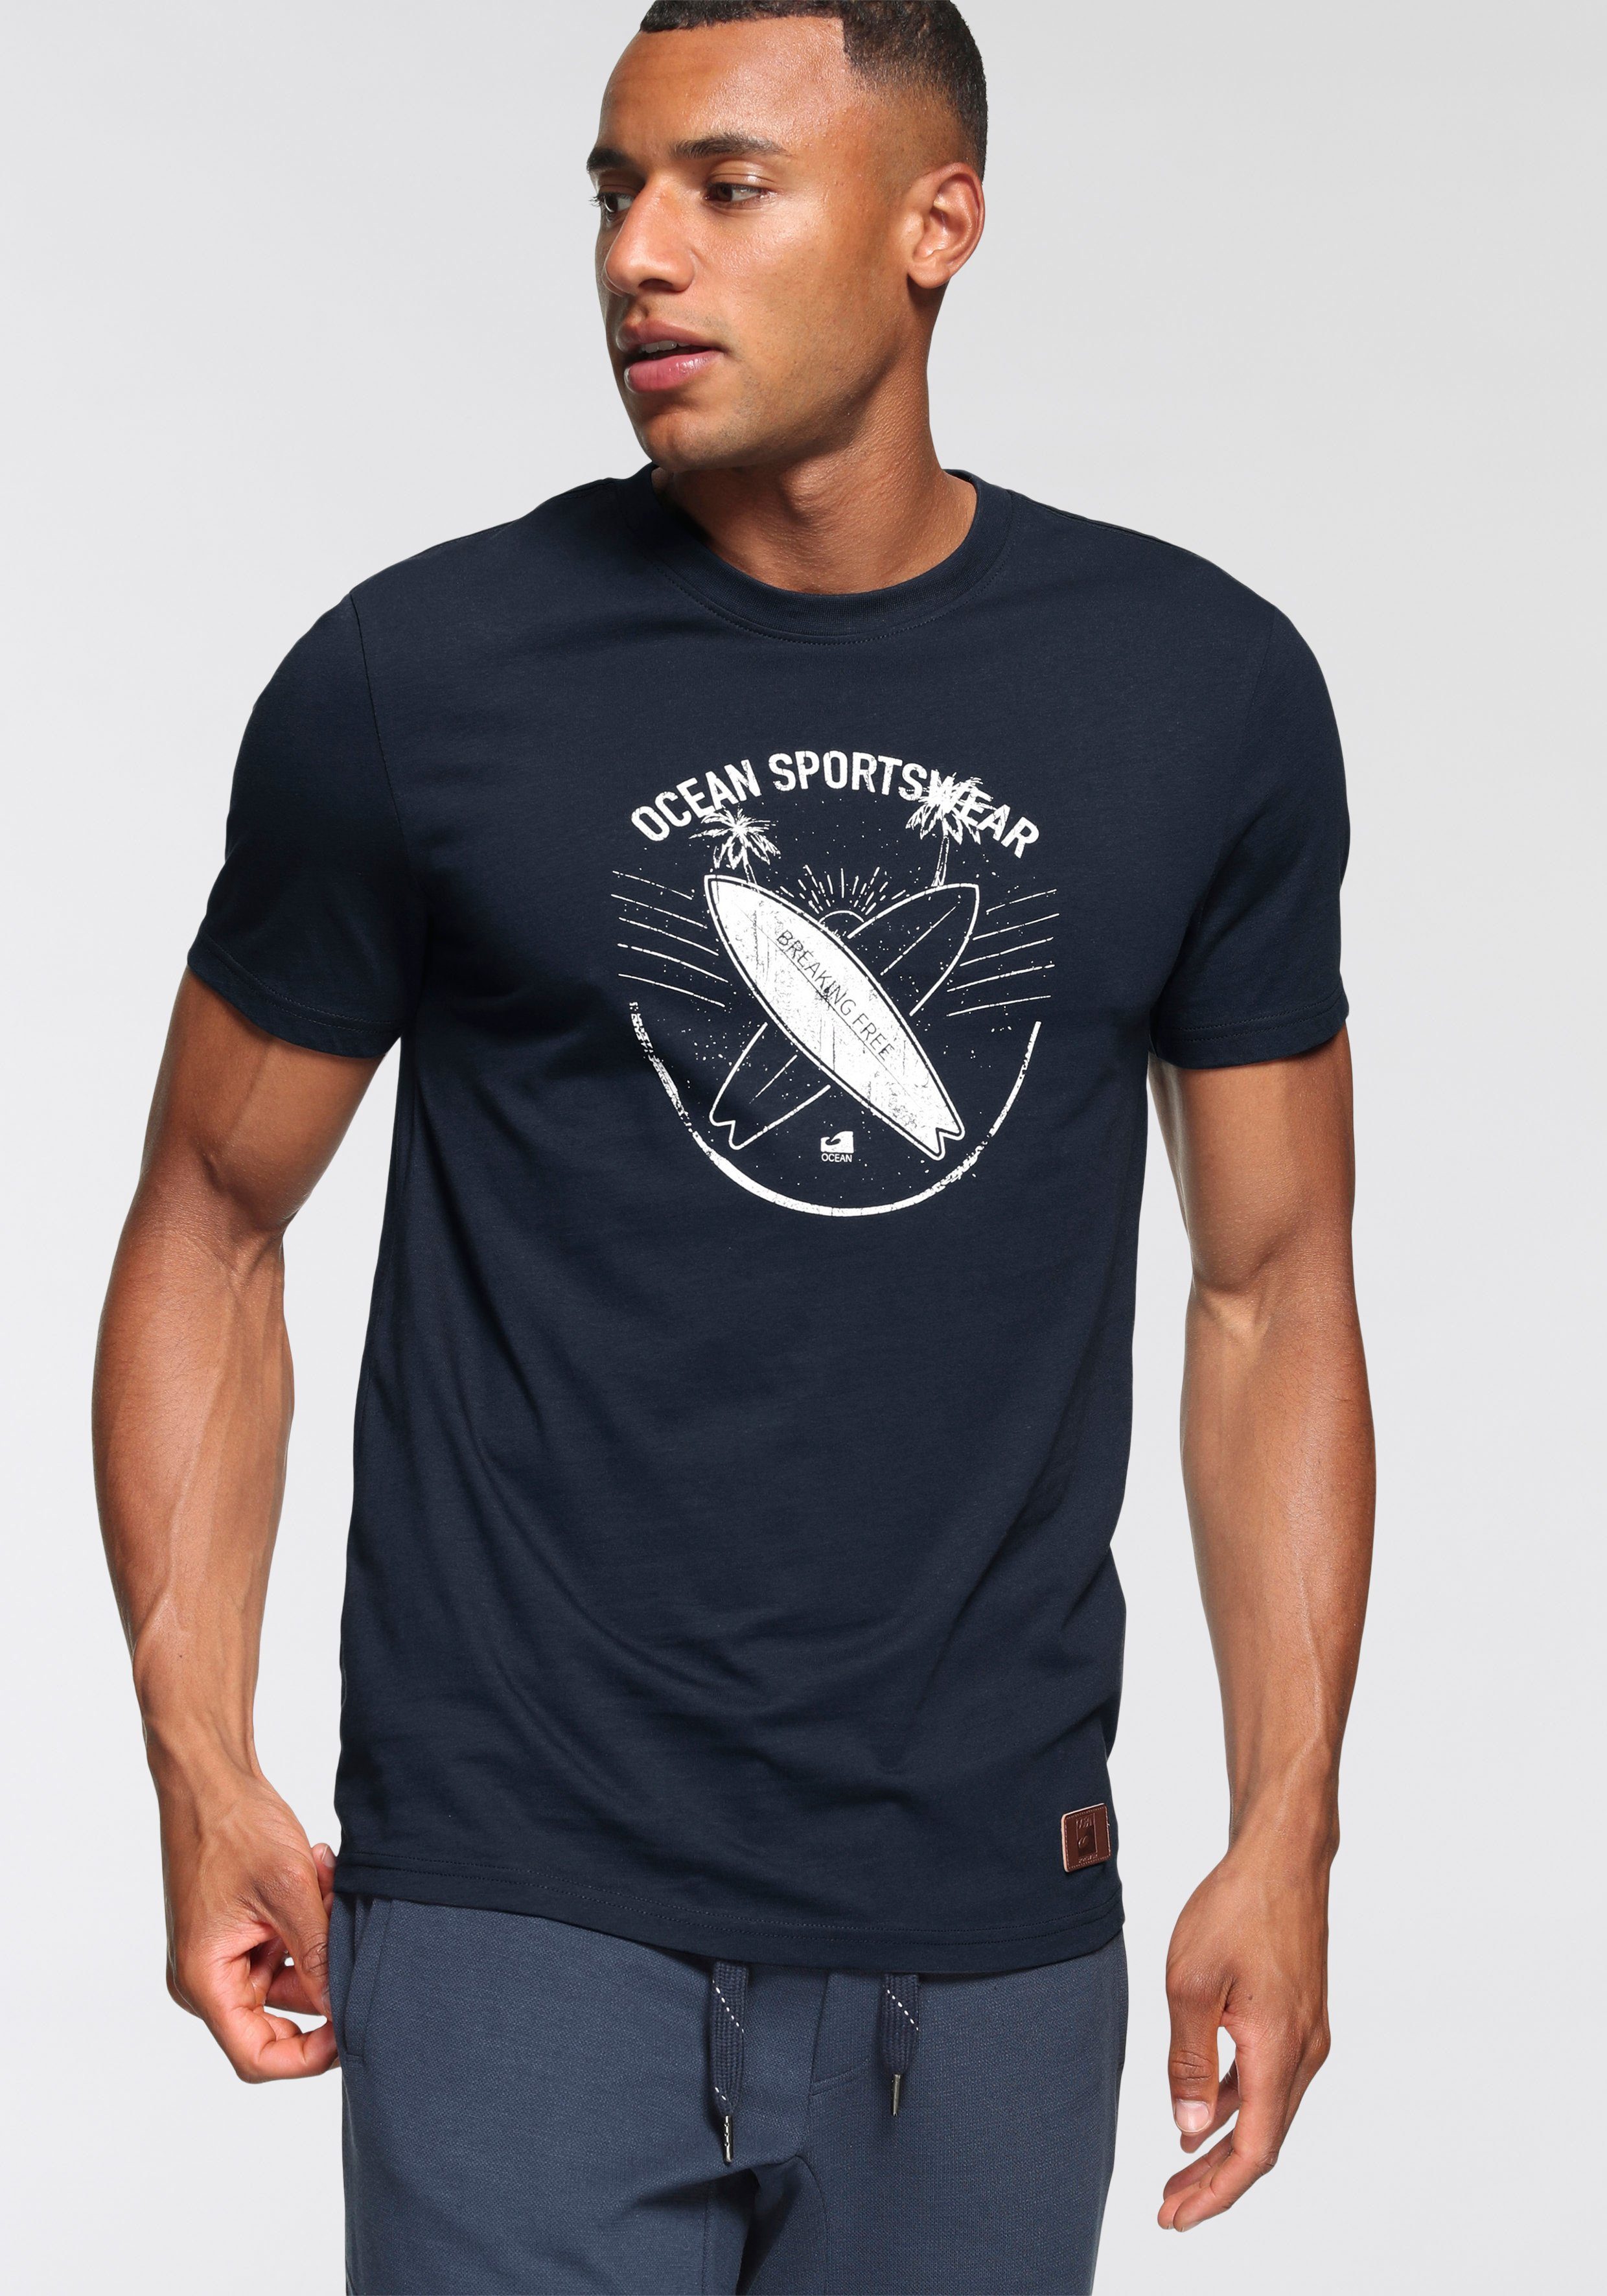 Ocean Sportswear T-Shirt marine